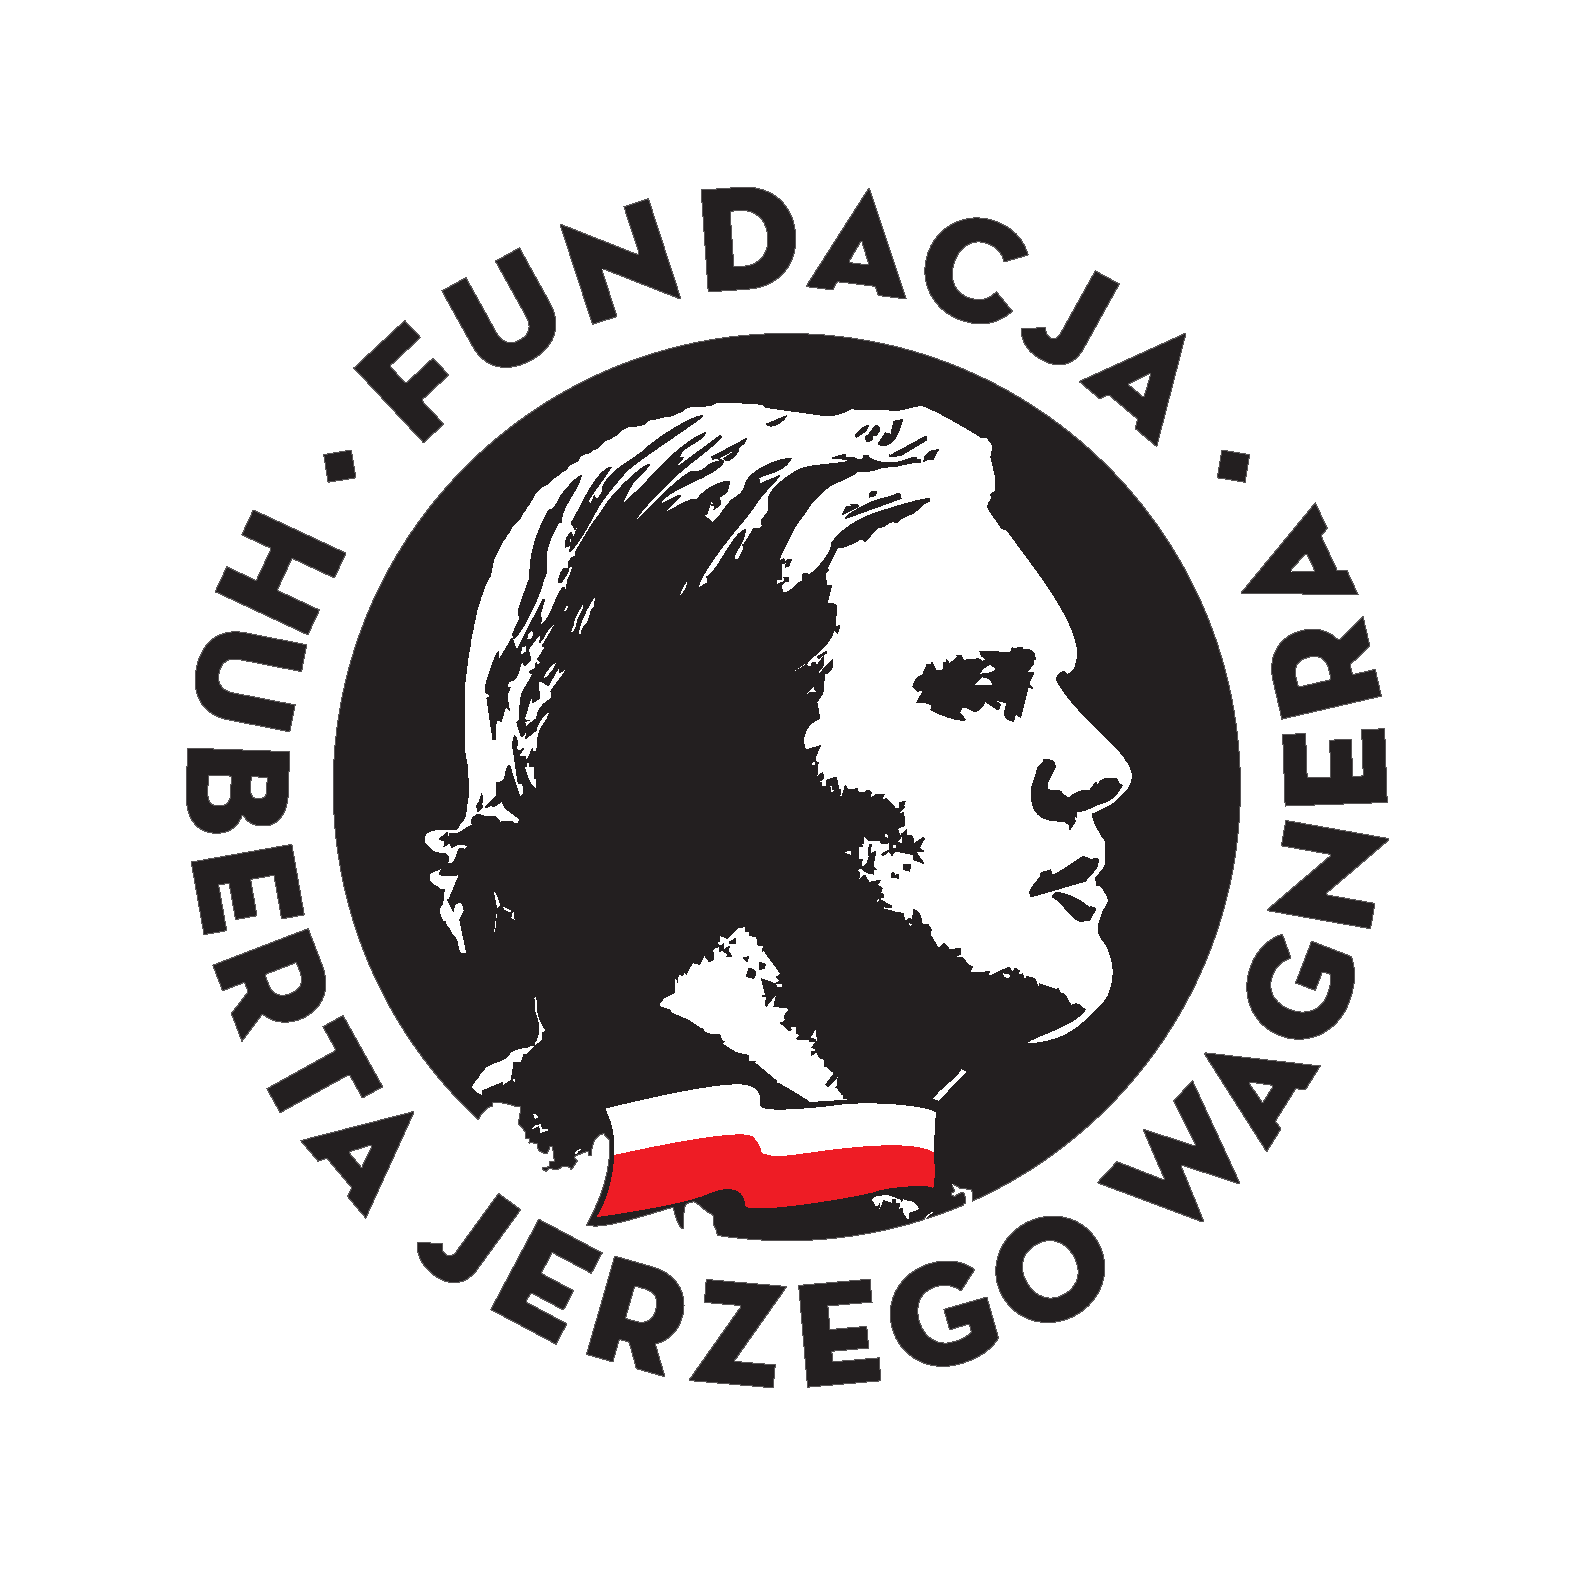 Fundacja Huberta Jerzego Wagnera